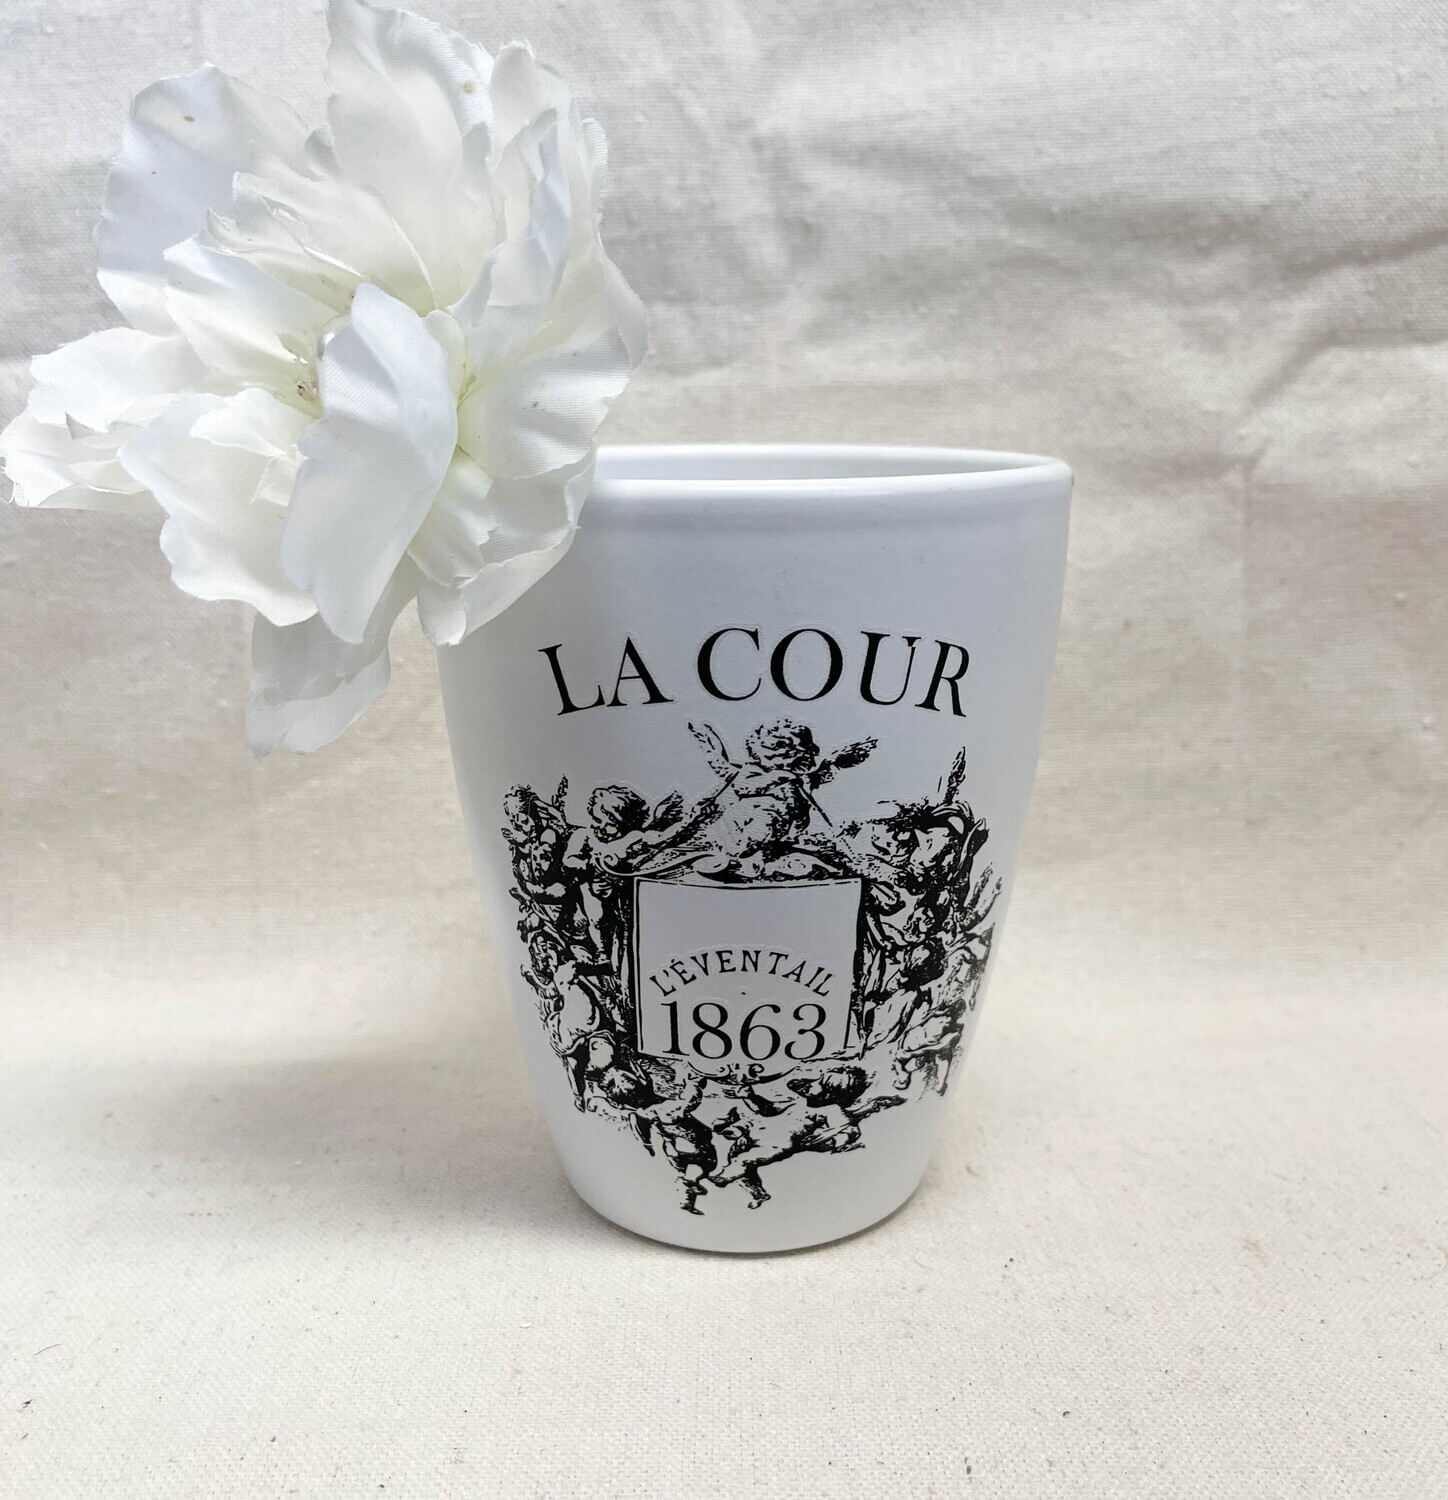 Upcycled La Cour Ceramic Planter